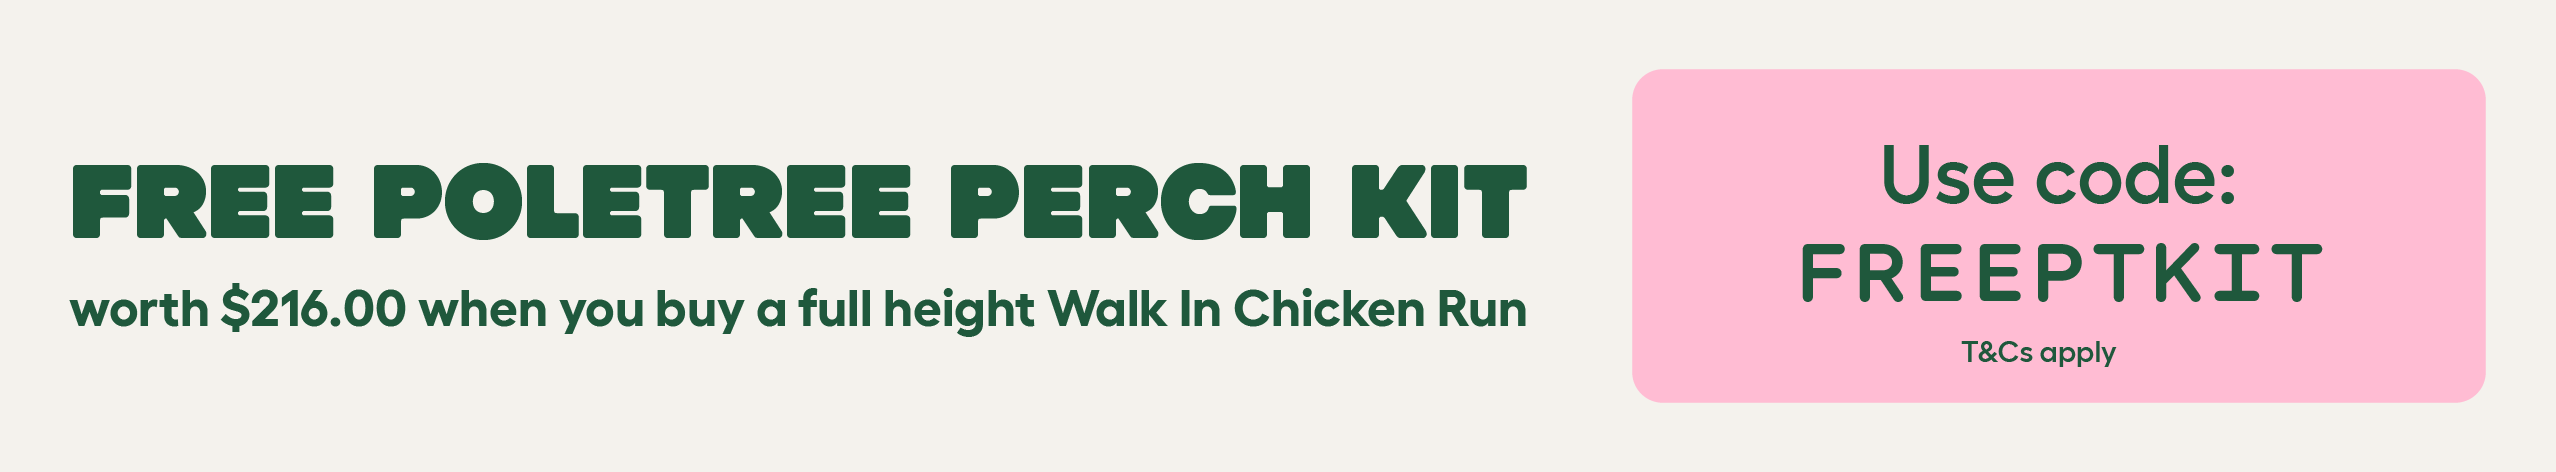 Free Poletree perch kit when you buy a full height walk in run